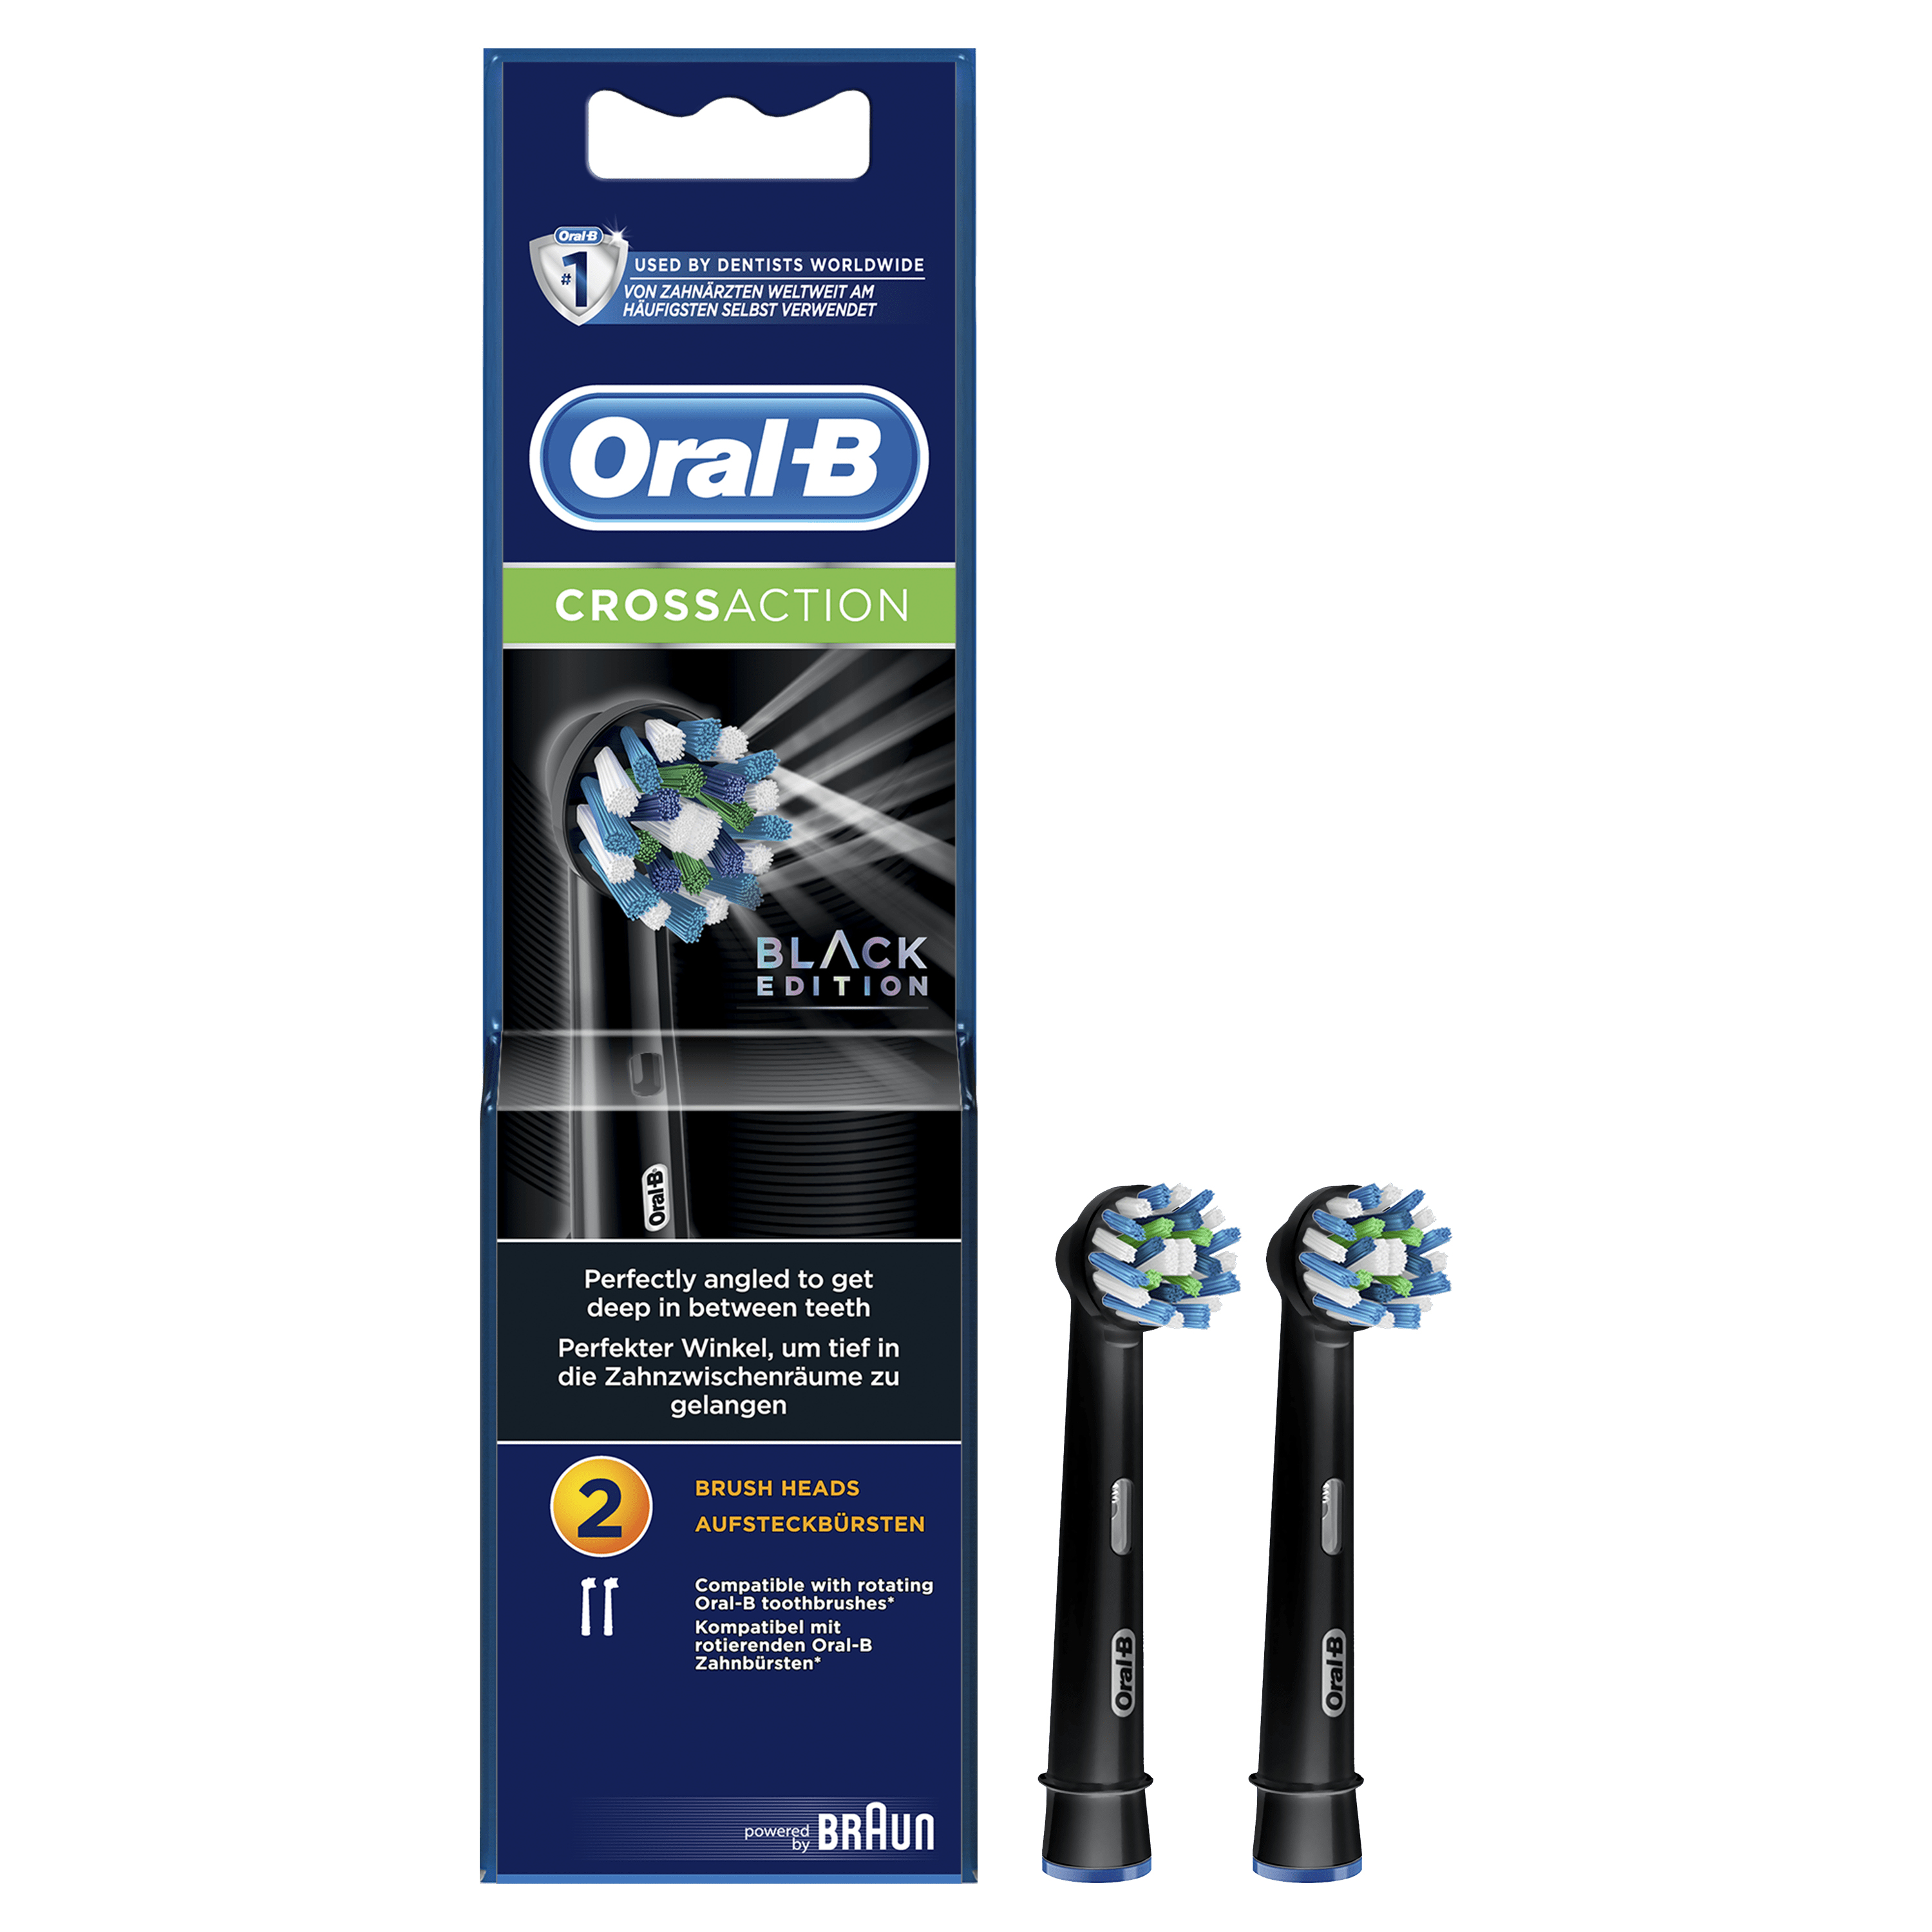 Oral-B CrossAction Opzetborstels Black, Verpakking Van 2, Black Edition